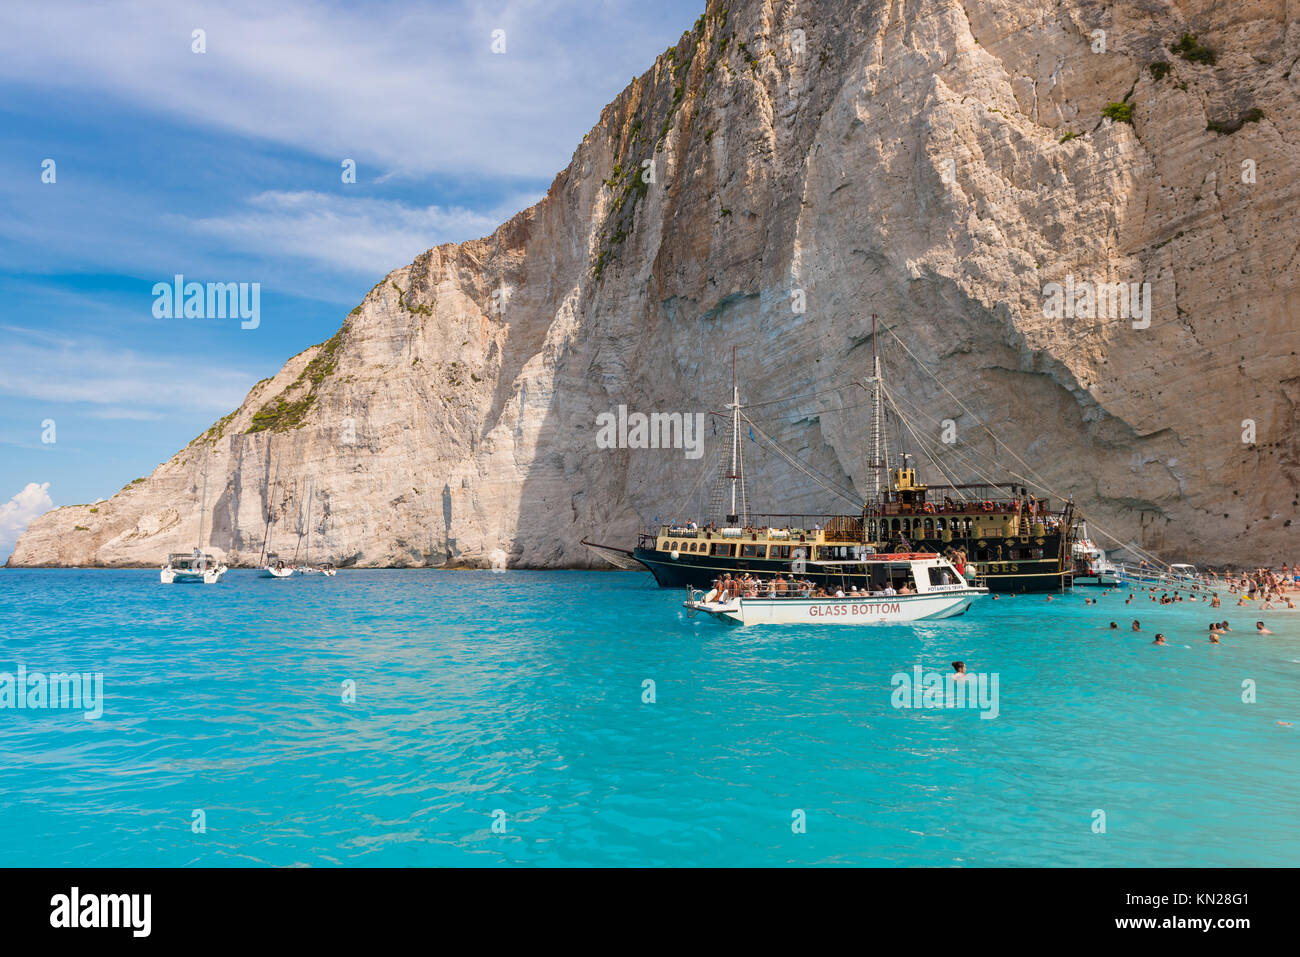 ZAKYNTHOS, GREECE, September 27, 2017: Tourists on excursion boat trip in the Navagio beach.  Zakynthos island, Greece Stock Photo